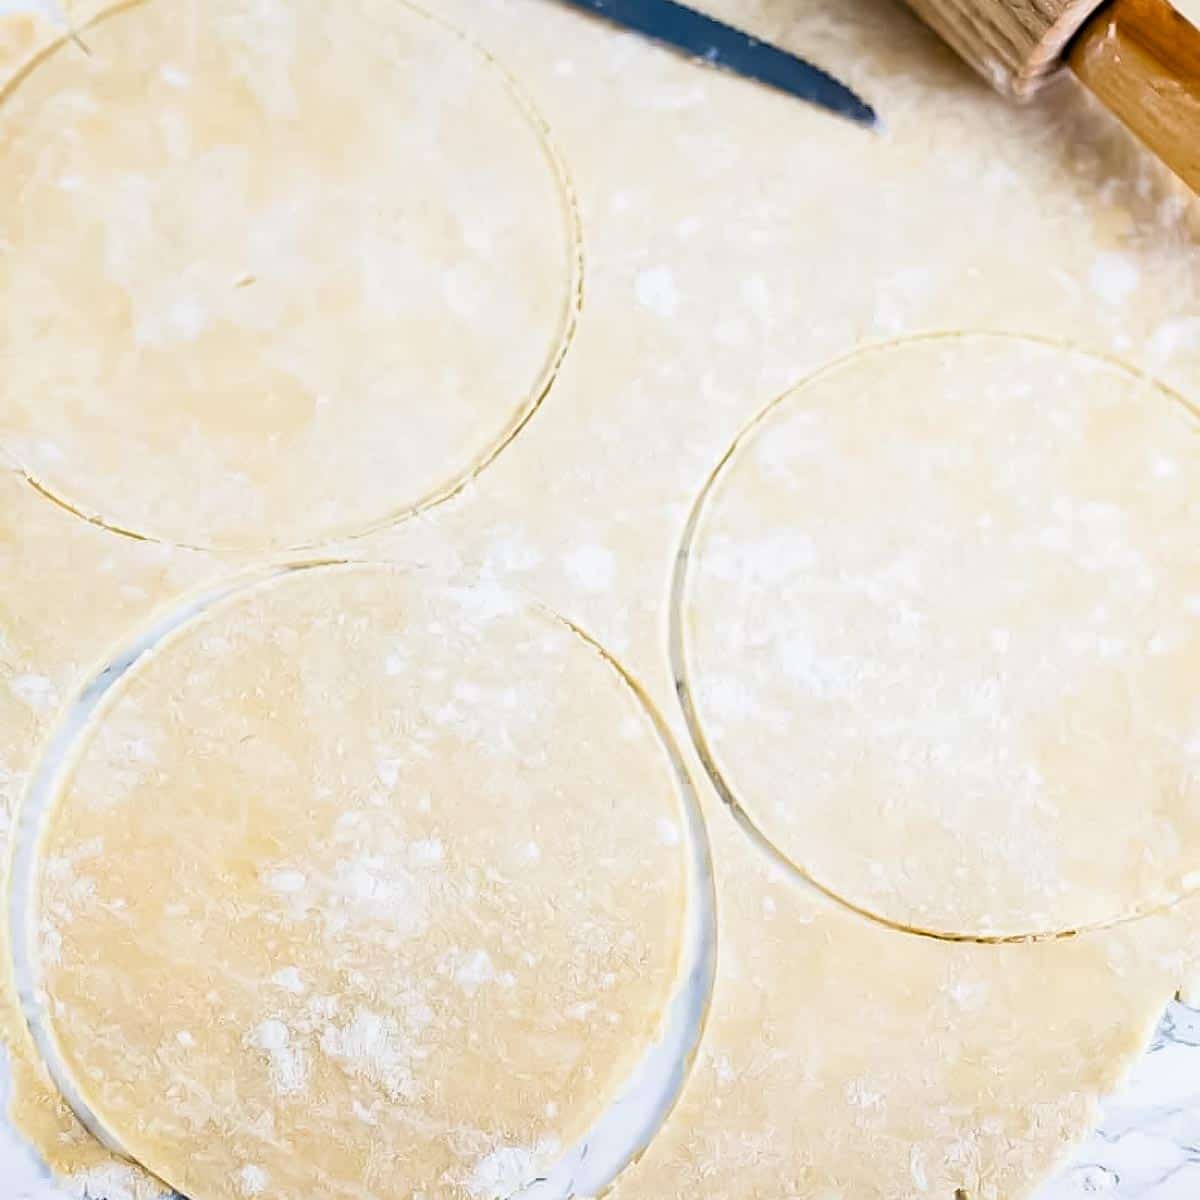 cutting circles of empanada dough from a sheet of dough